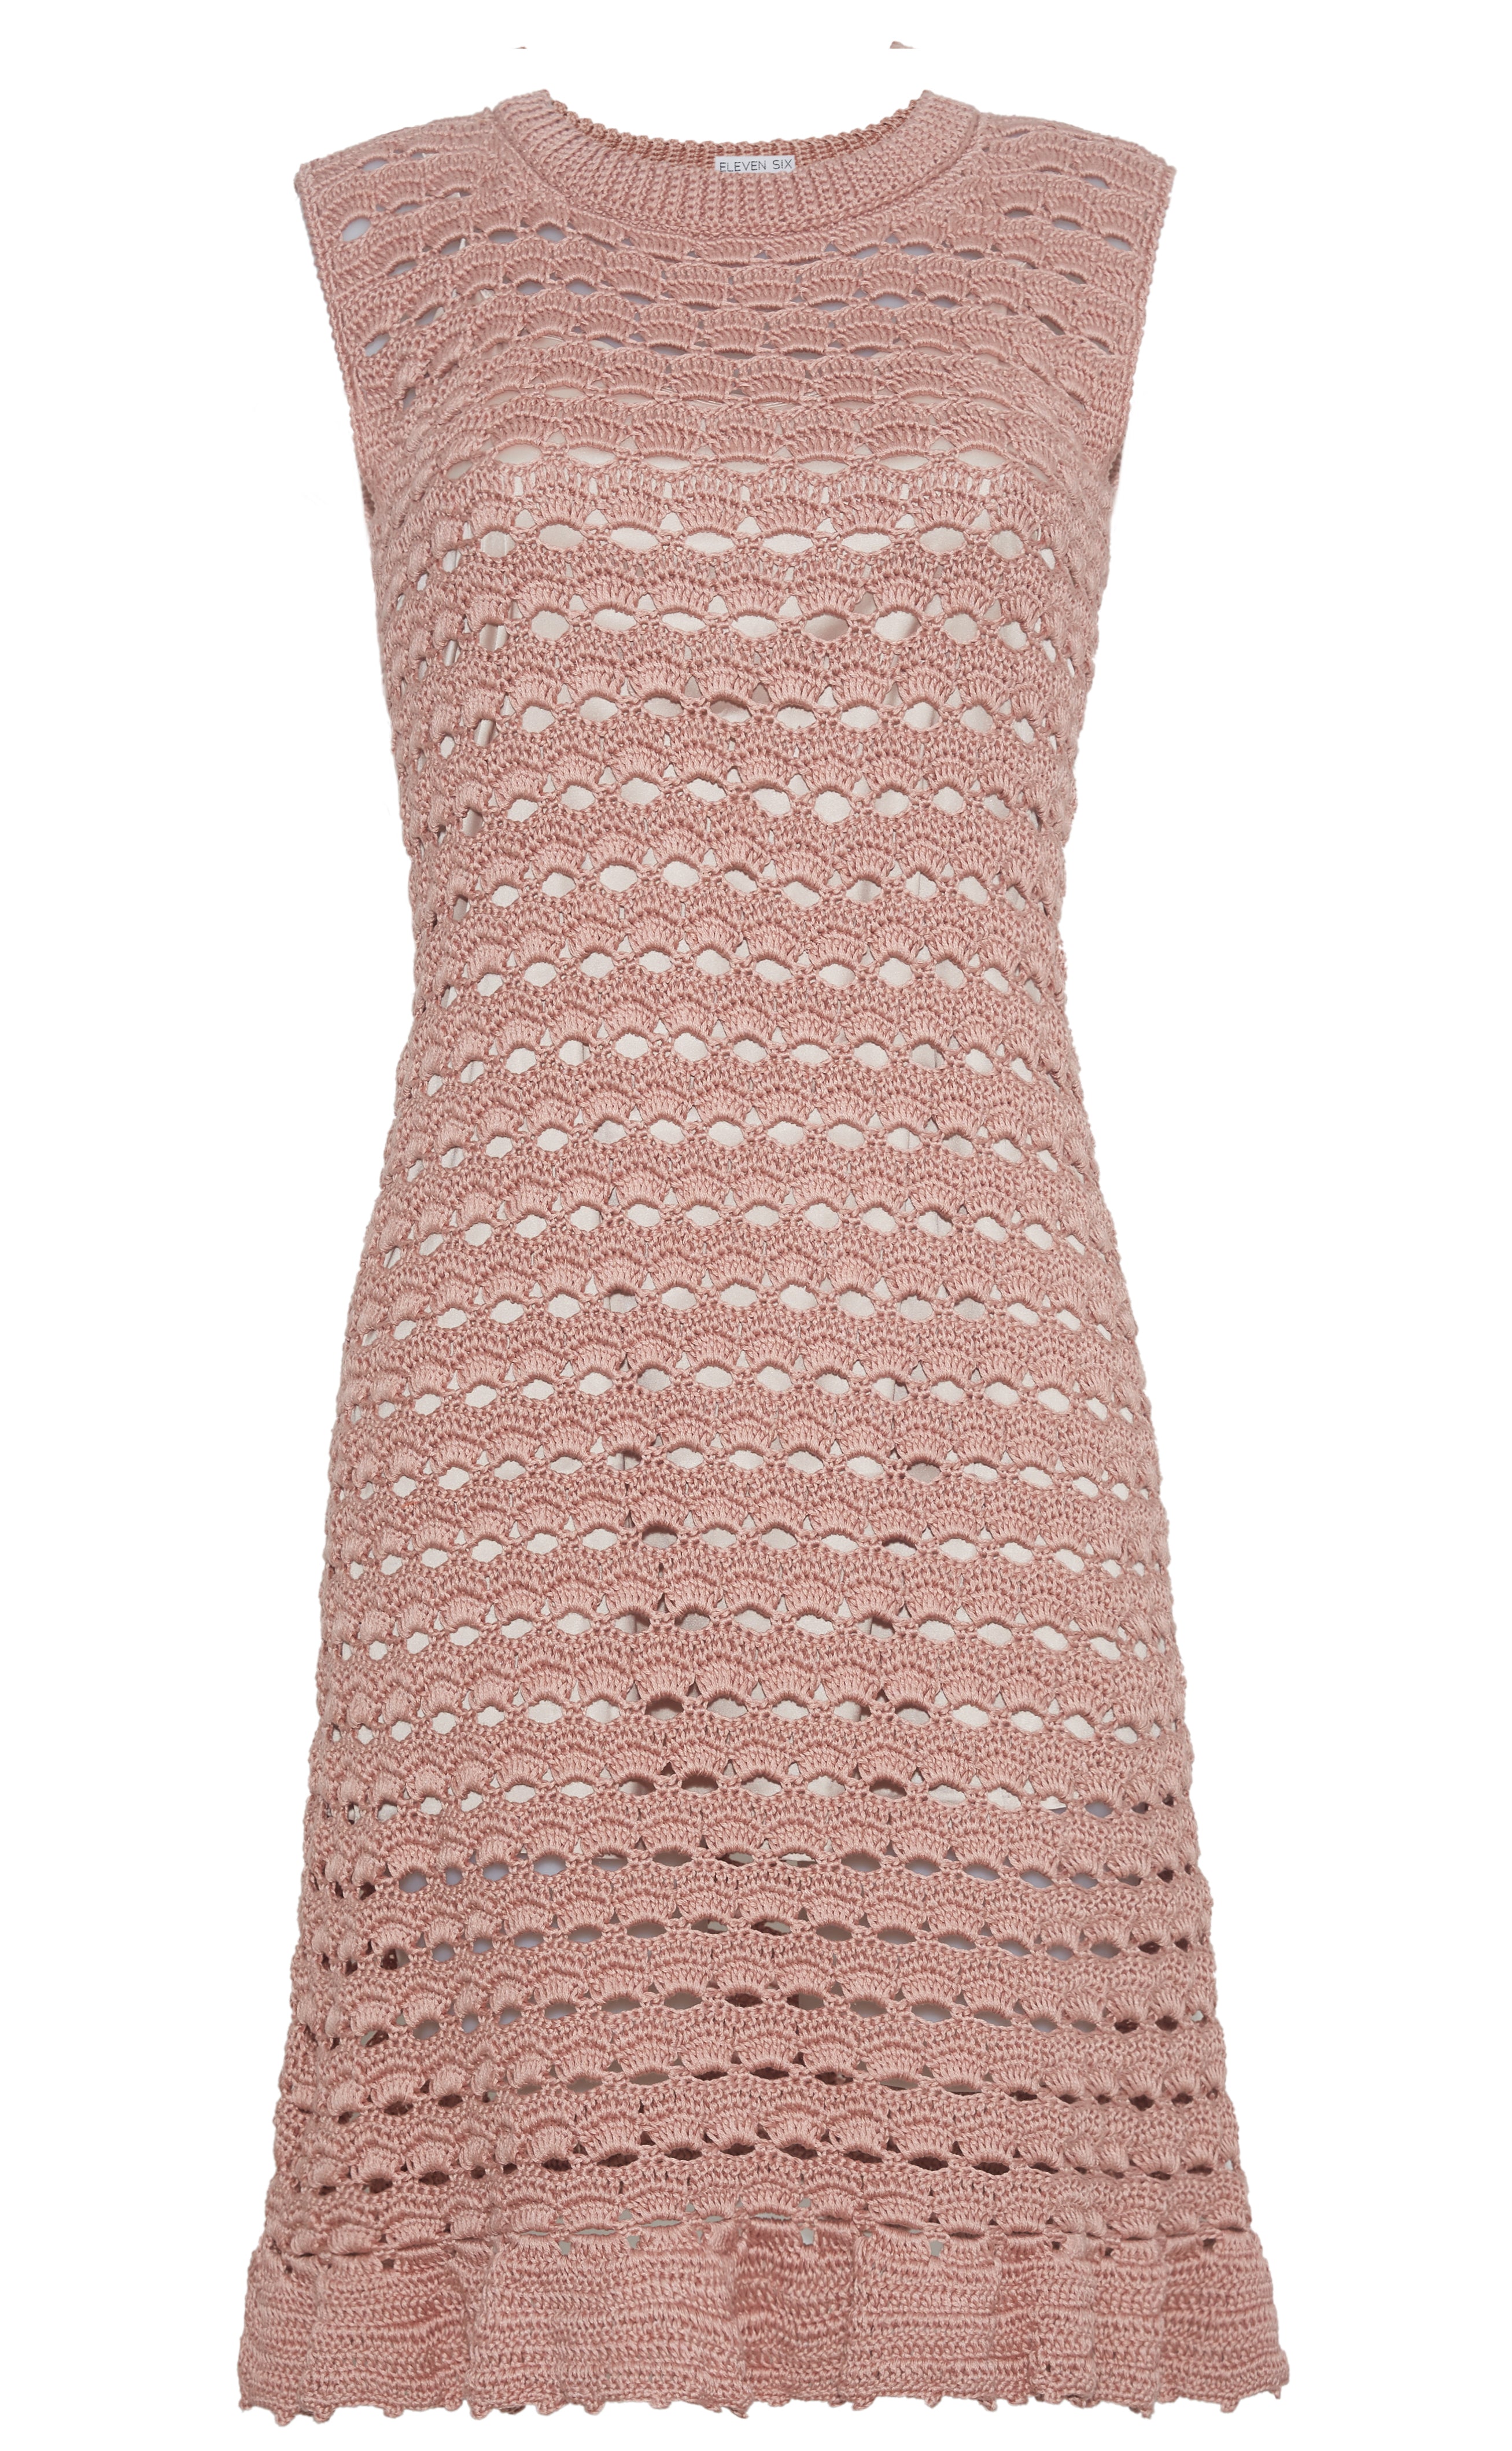 Remi Crochet Dress